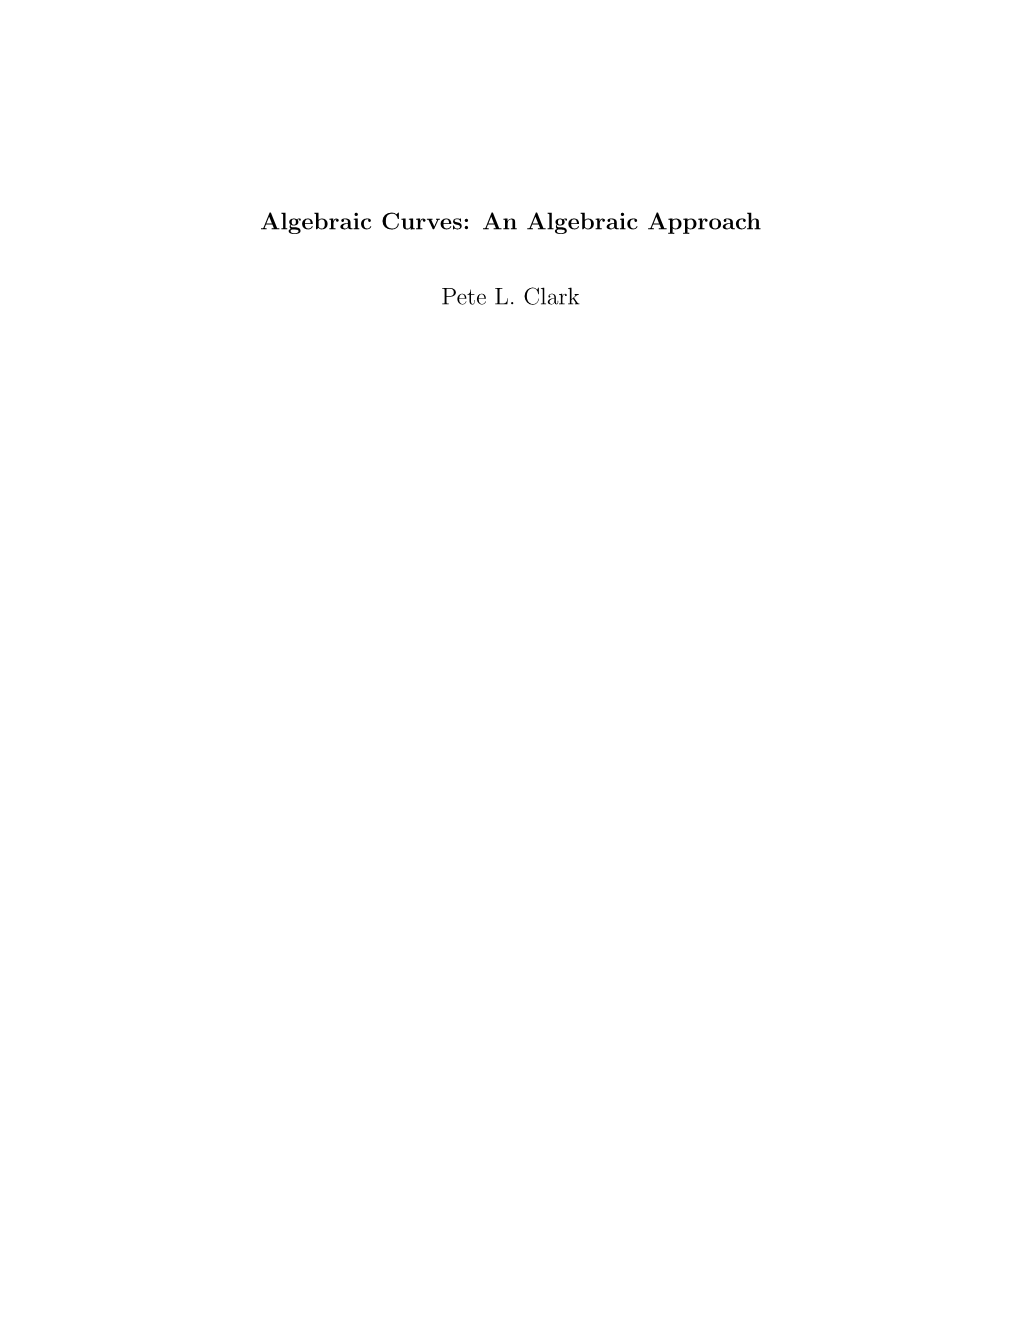 Algebraic Curves: an Algebraic Approach